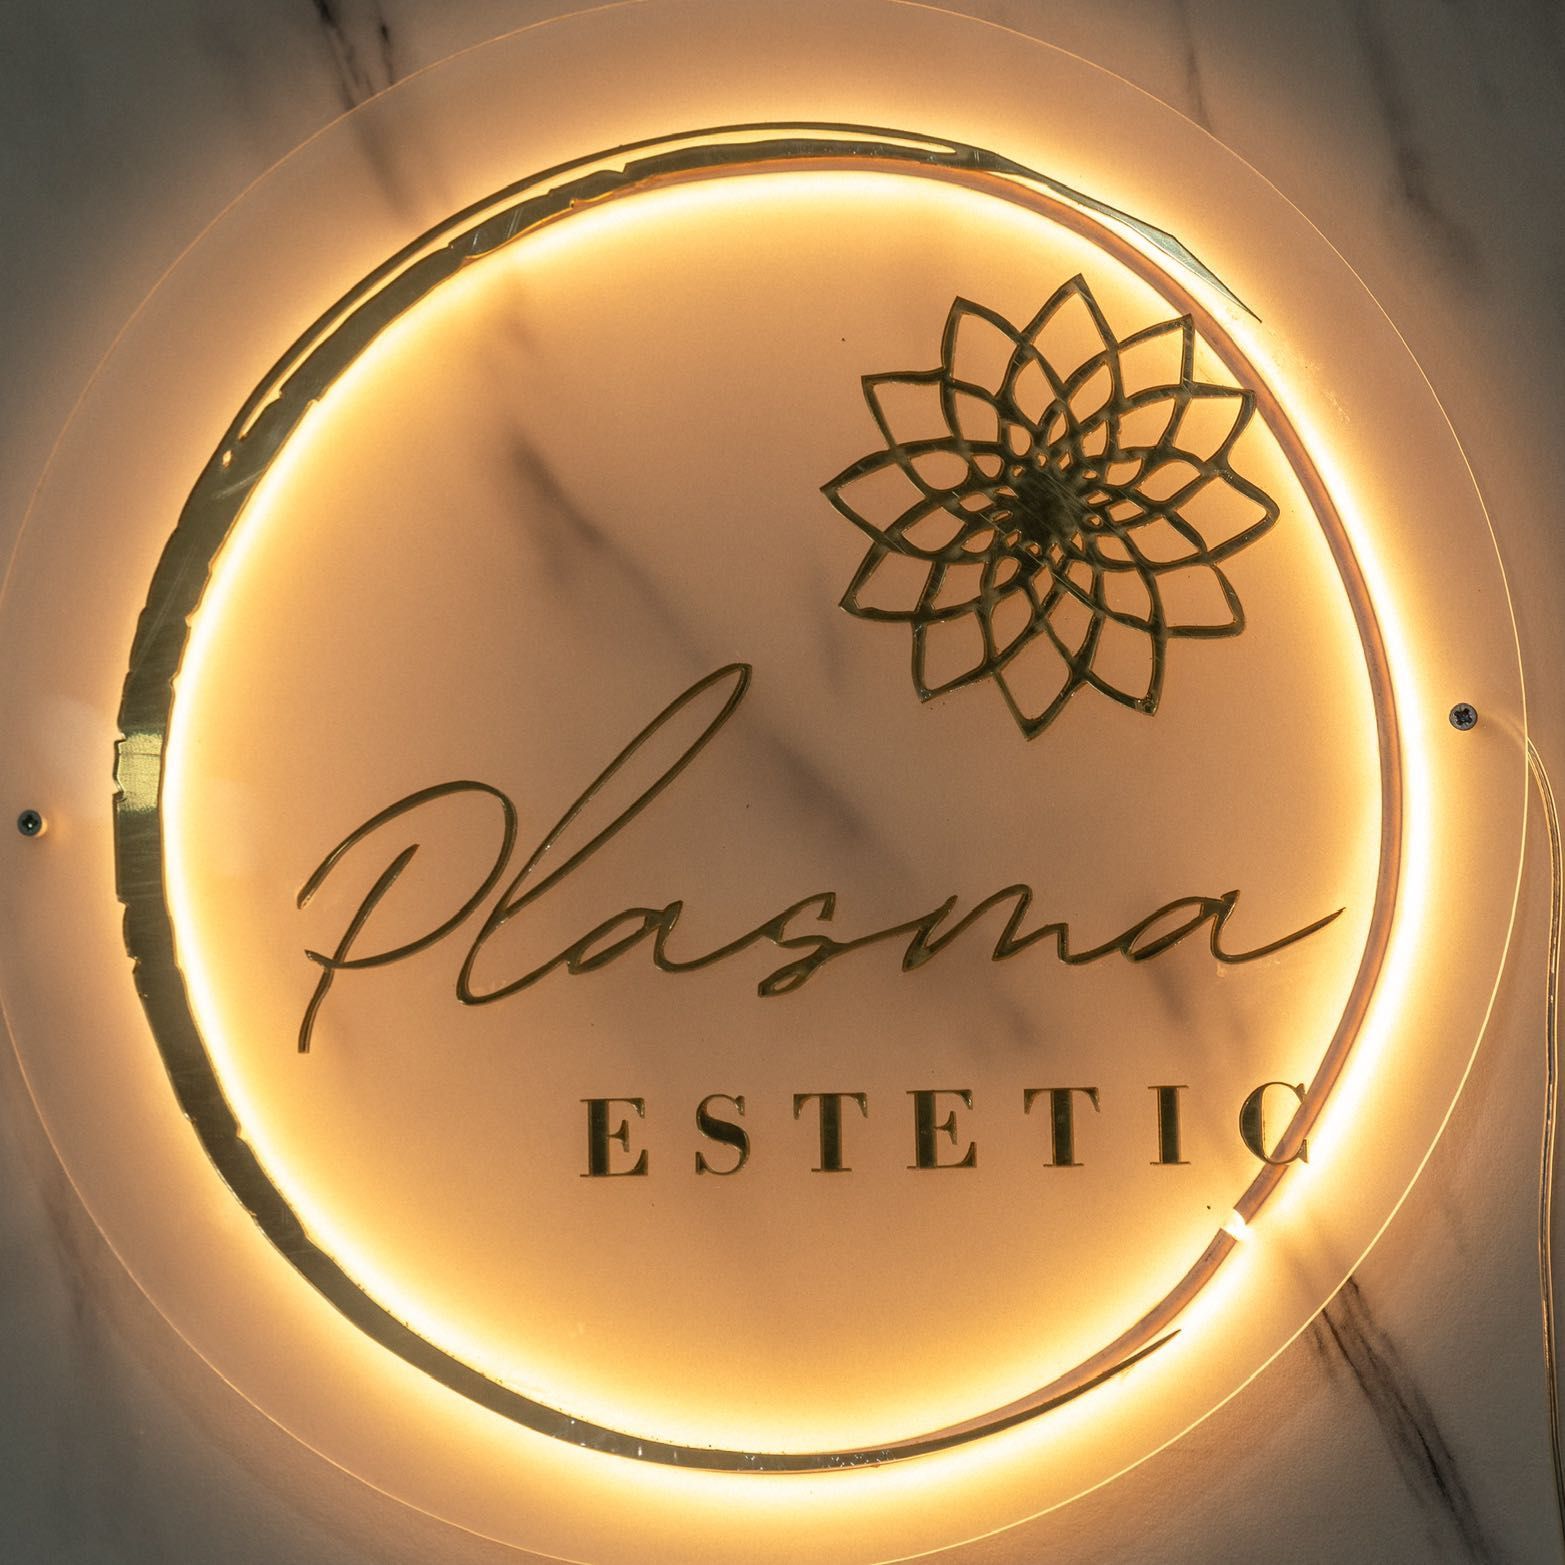 Plasma Estetic, Calle Real, 57, Local 44, 28400, Collado Villalba